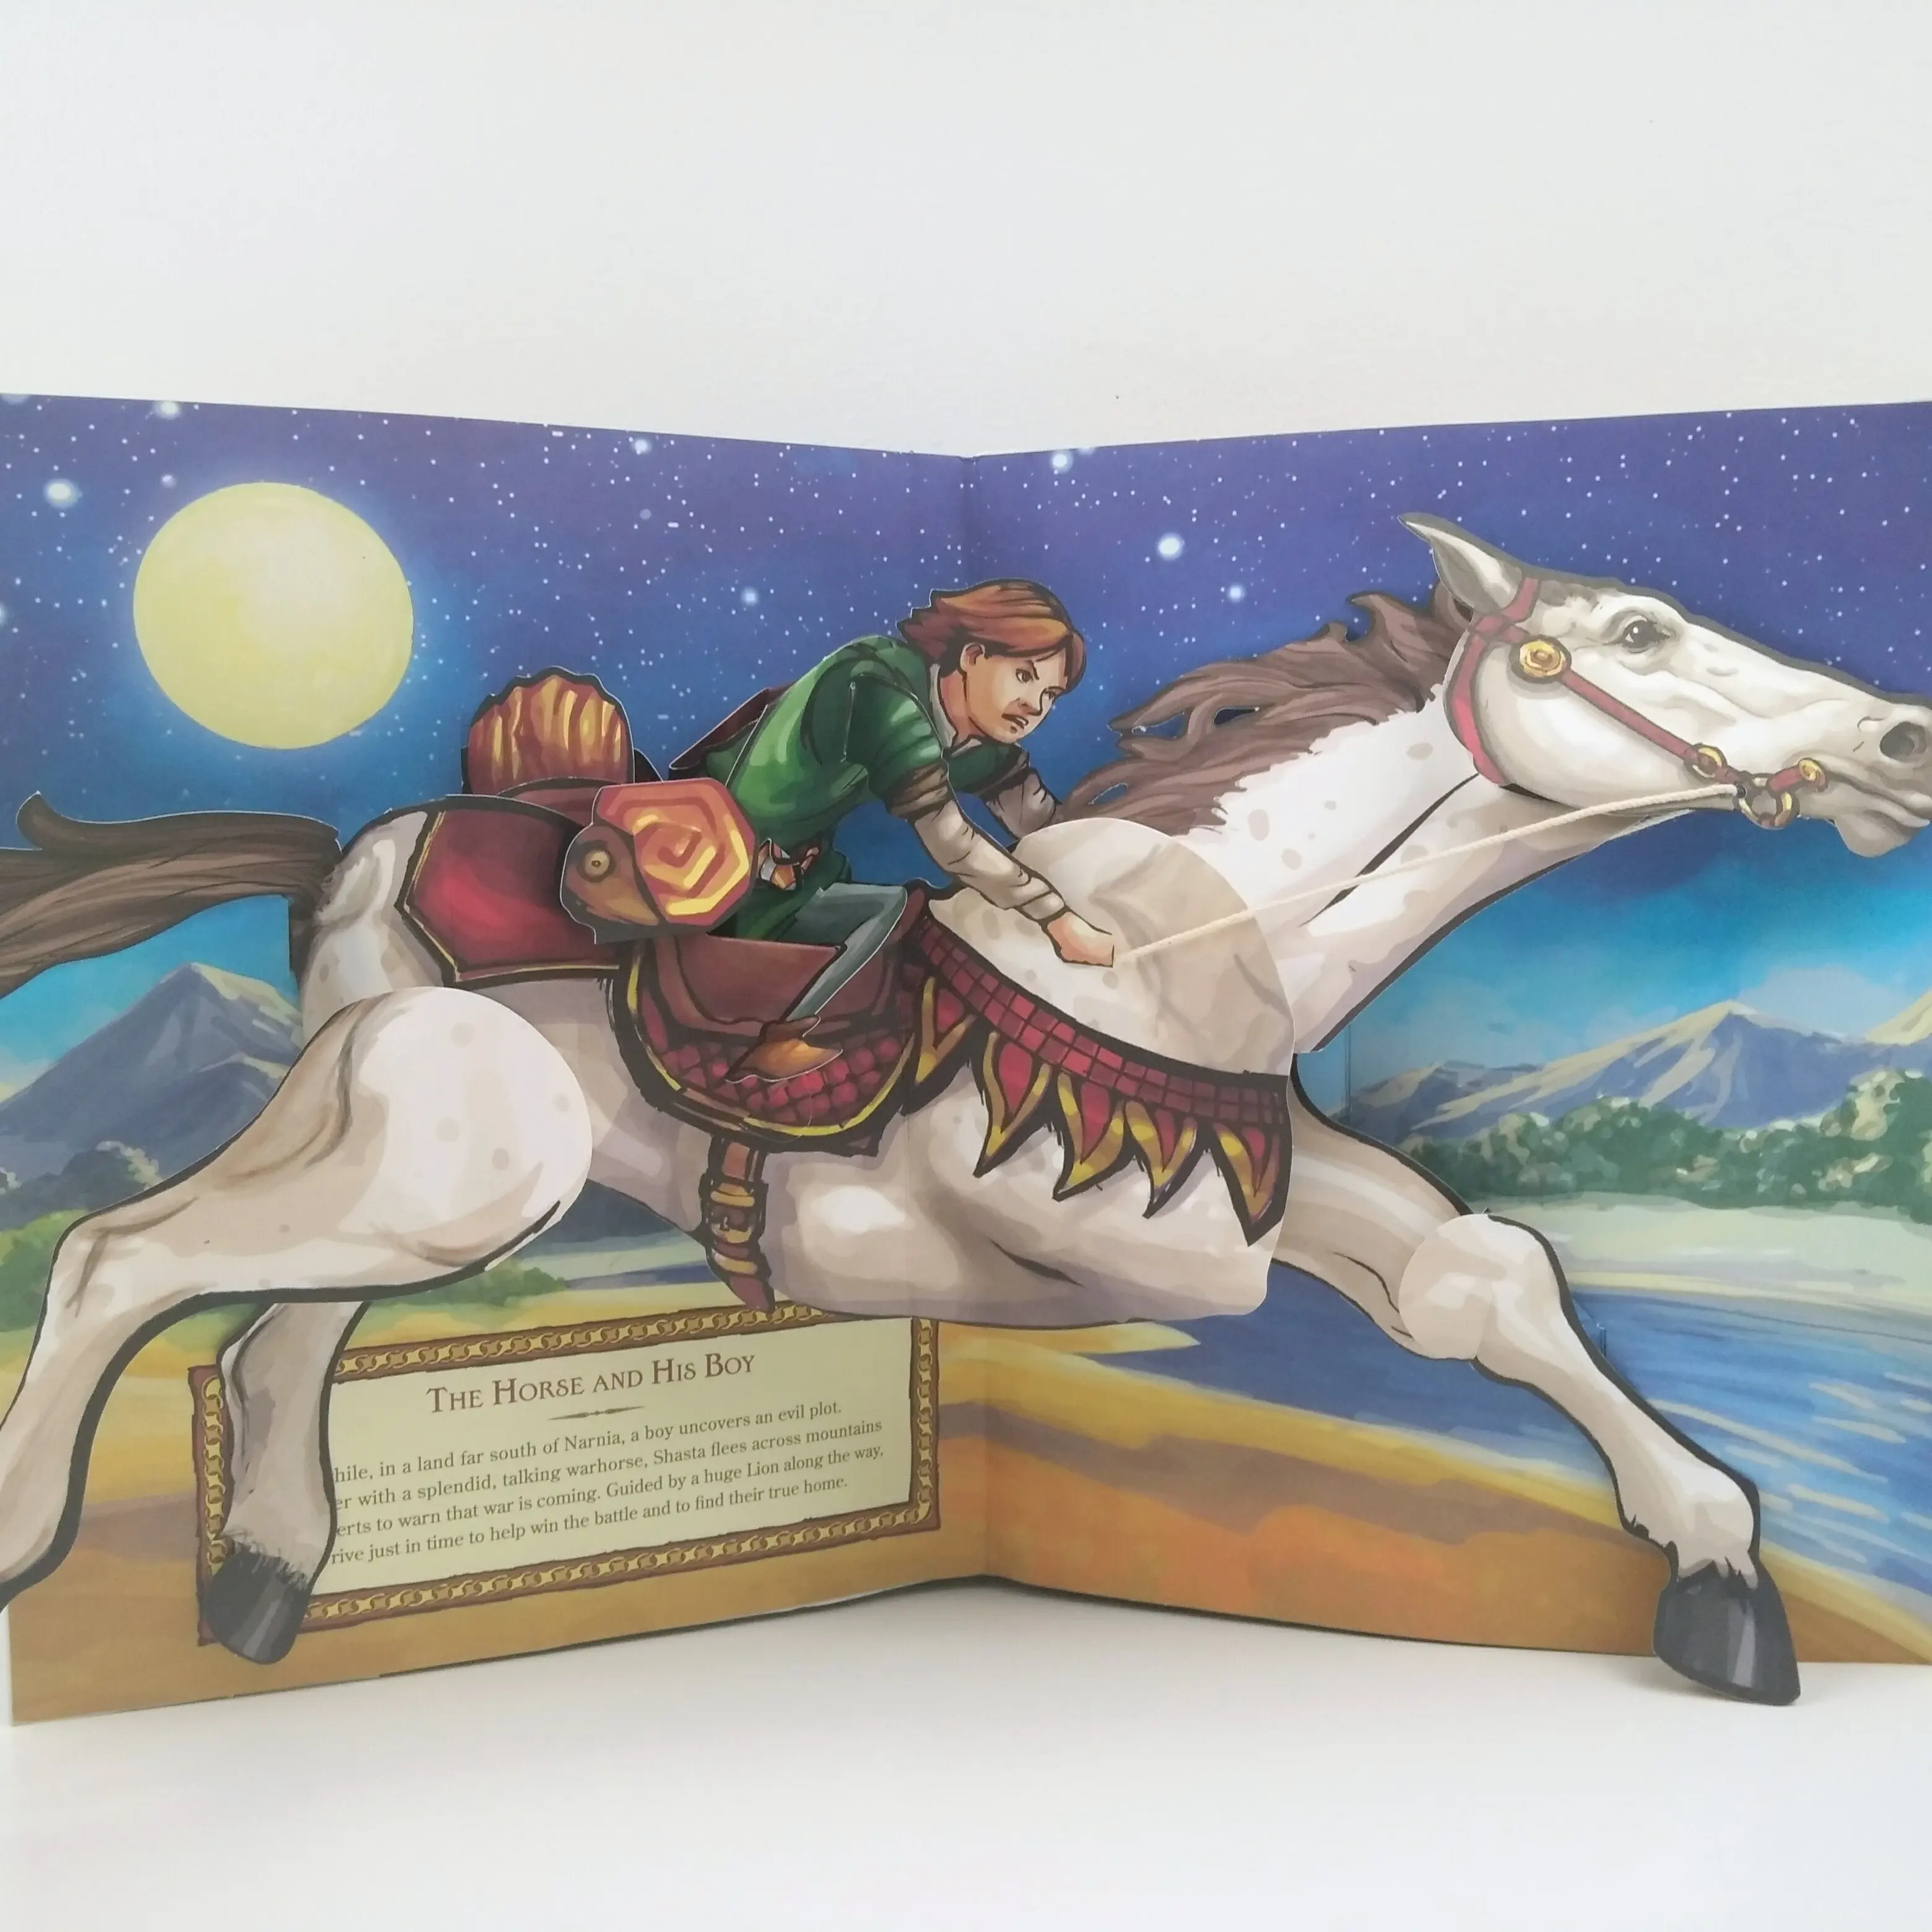 3d Pop-up Book Kids Story Printing on Demand Stori Book for Child Board Book stampa Offset animale con copertina rigida di alta qualità